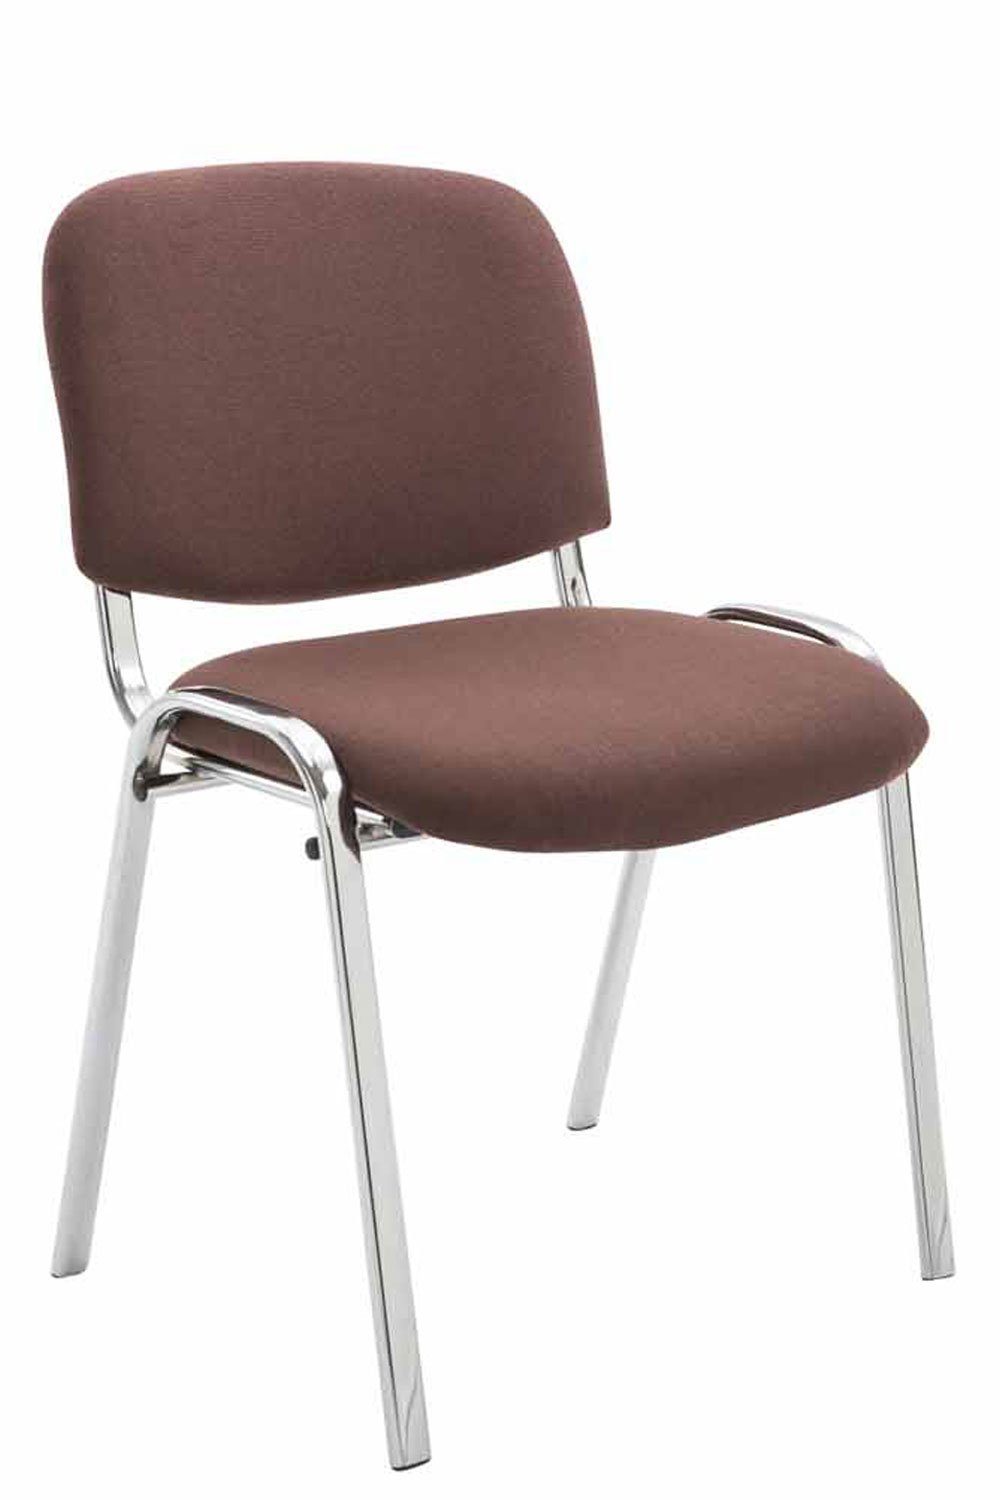 TPFLiving Besucherstuhl Keen mit hochwertiger Polsterung - Konferenzstuhl (Besprechungsstuhl - Warteraumstuhl - Messestuhl), Gestell: Metall chrom - Sitzfläche: Stoff braun